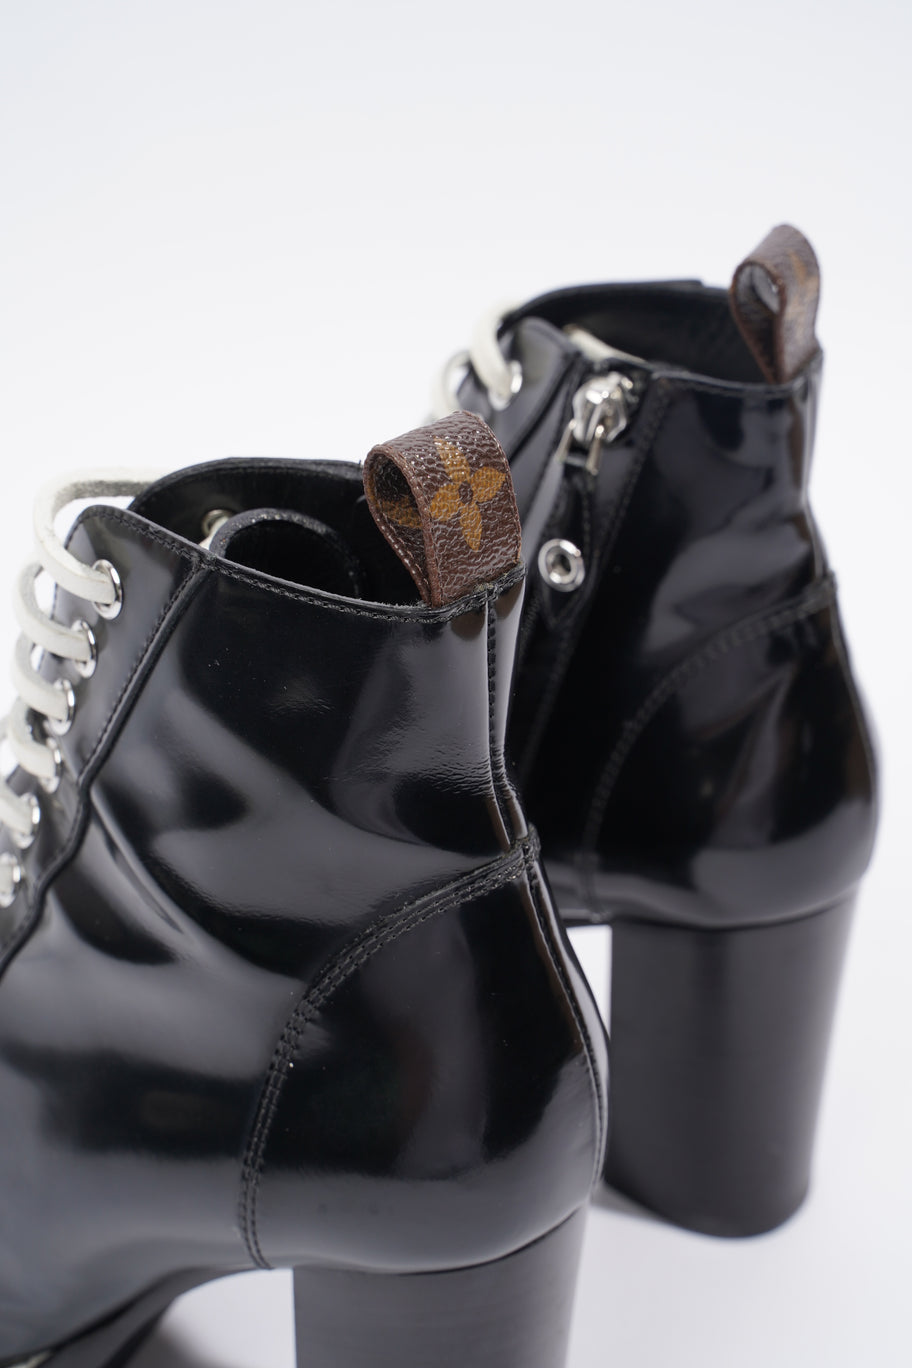 Louis Vuitton Star Trail Ankle Boot Patent Black EU 36 / UK 3 Image 10